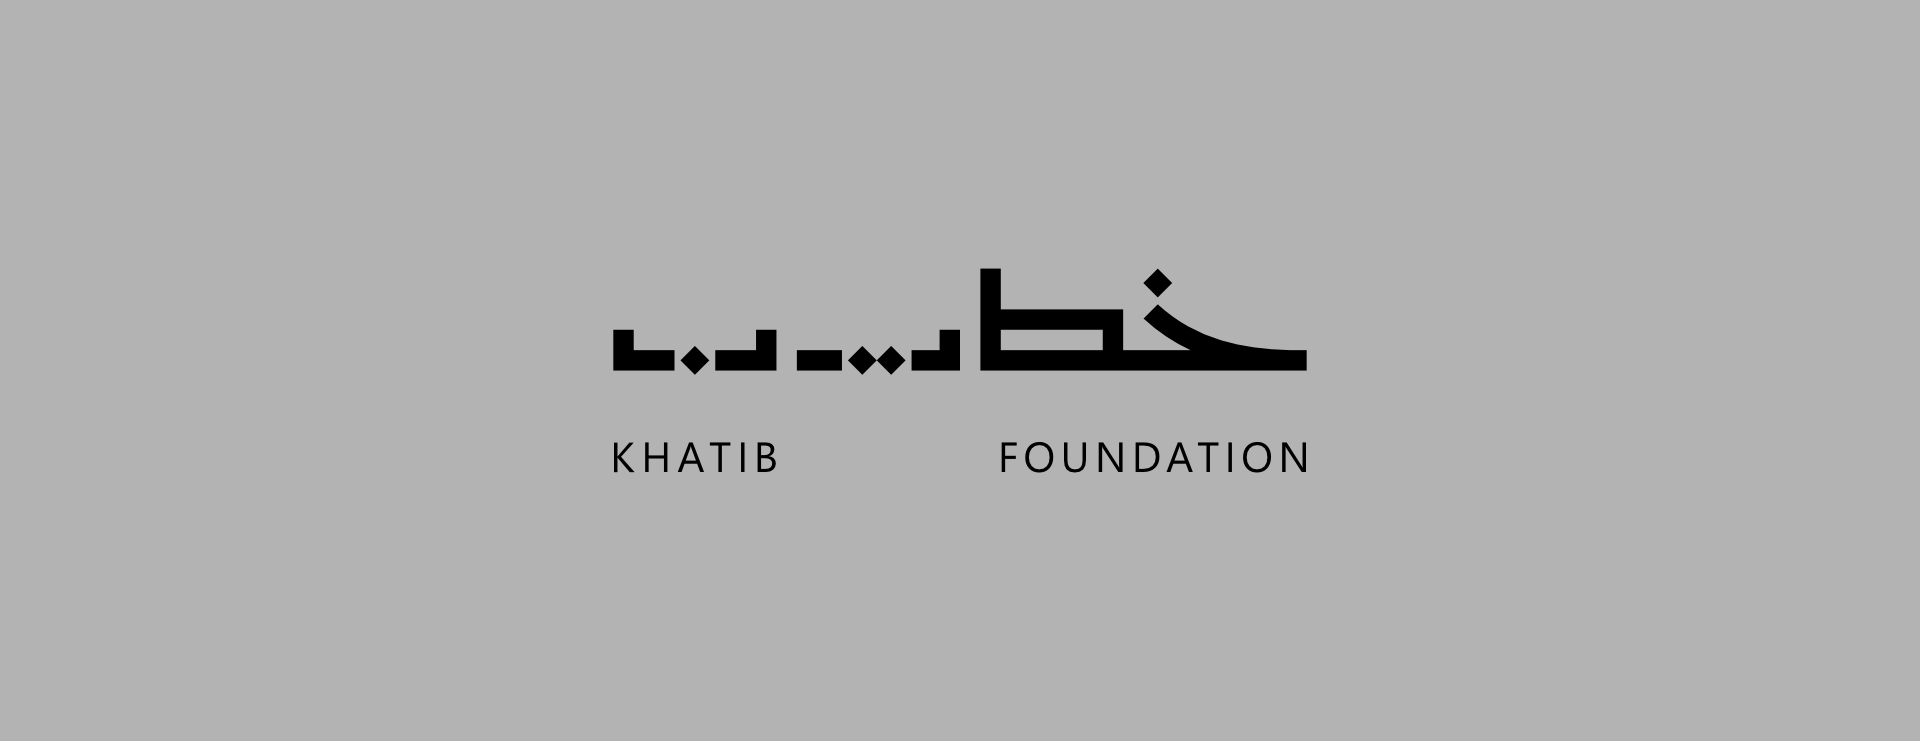 Khatib Foundation Logo Design